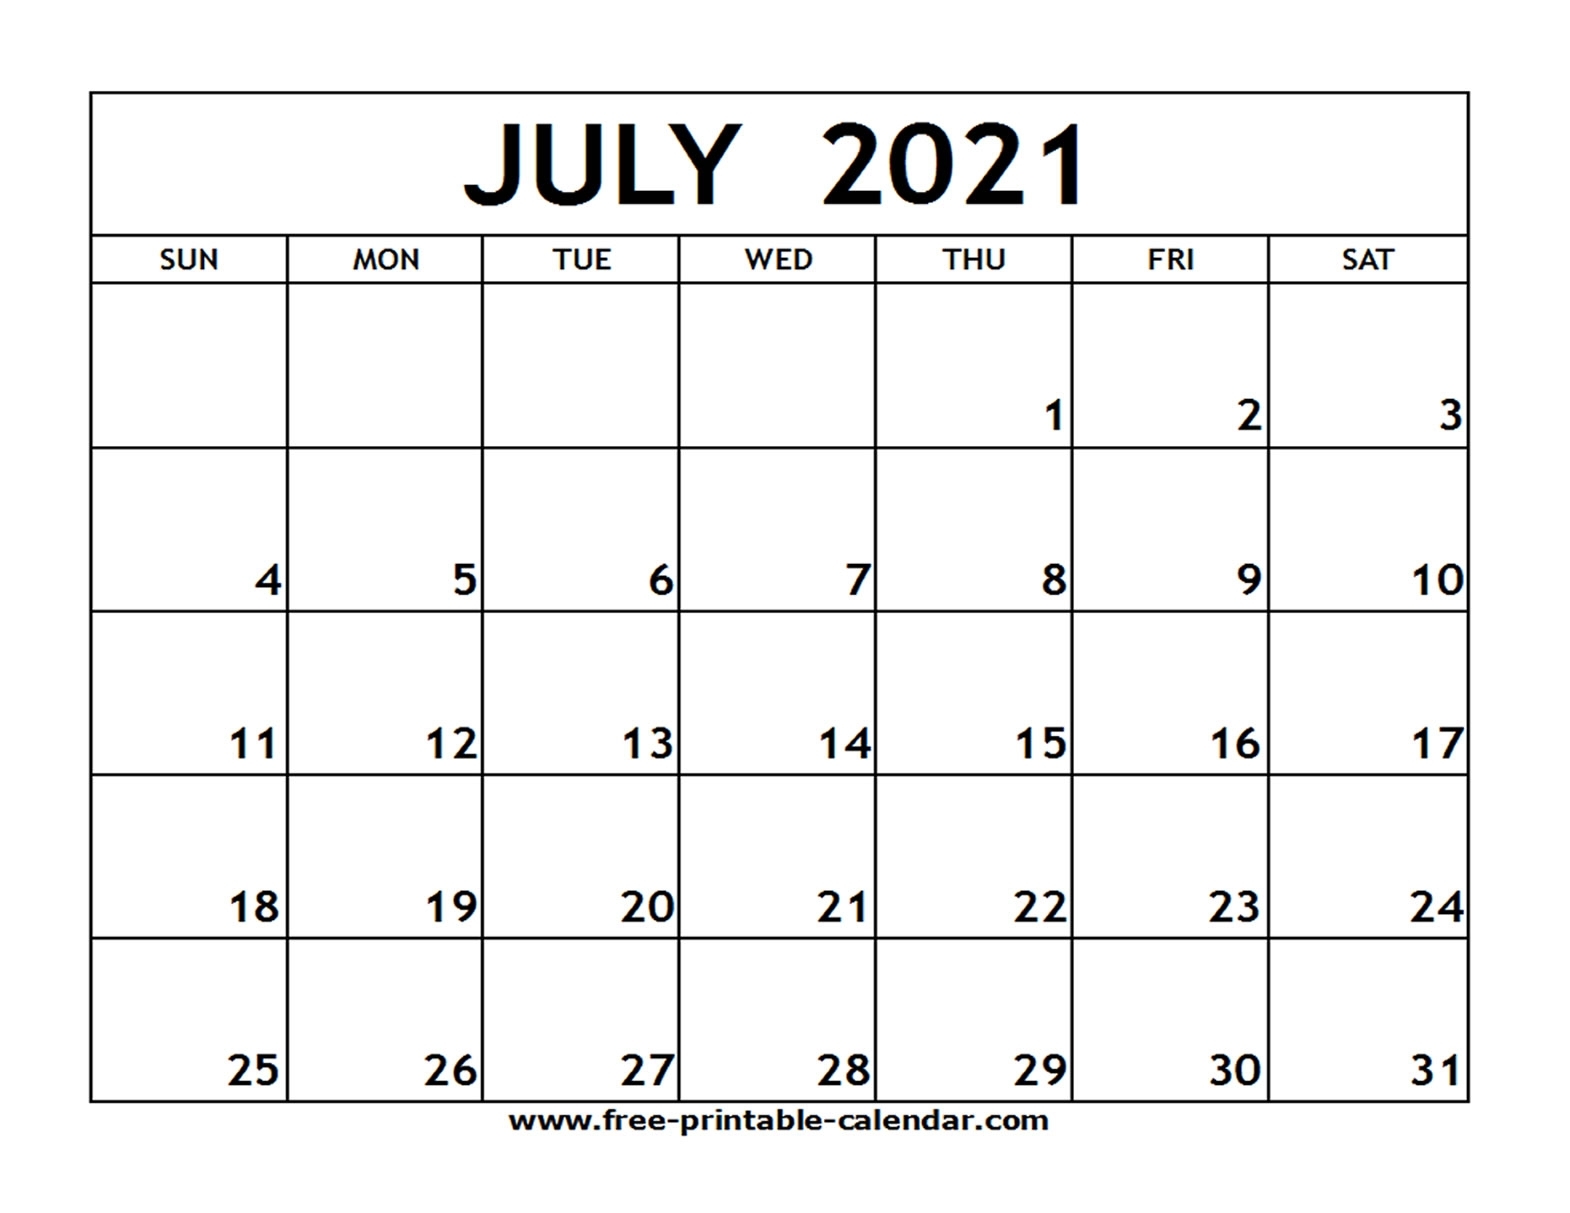 July 2021 Printable Calendar - Free-Printable-Calendar